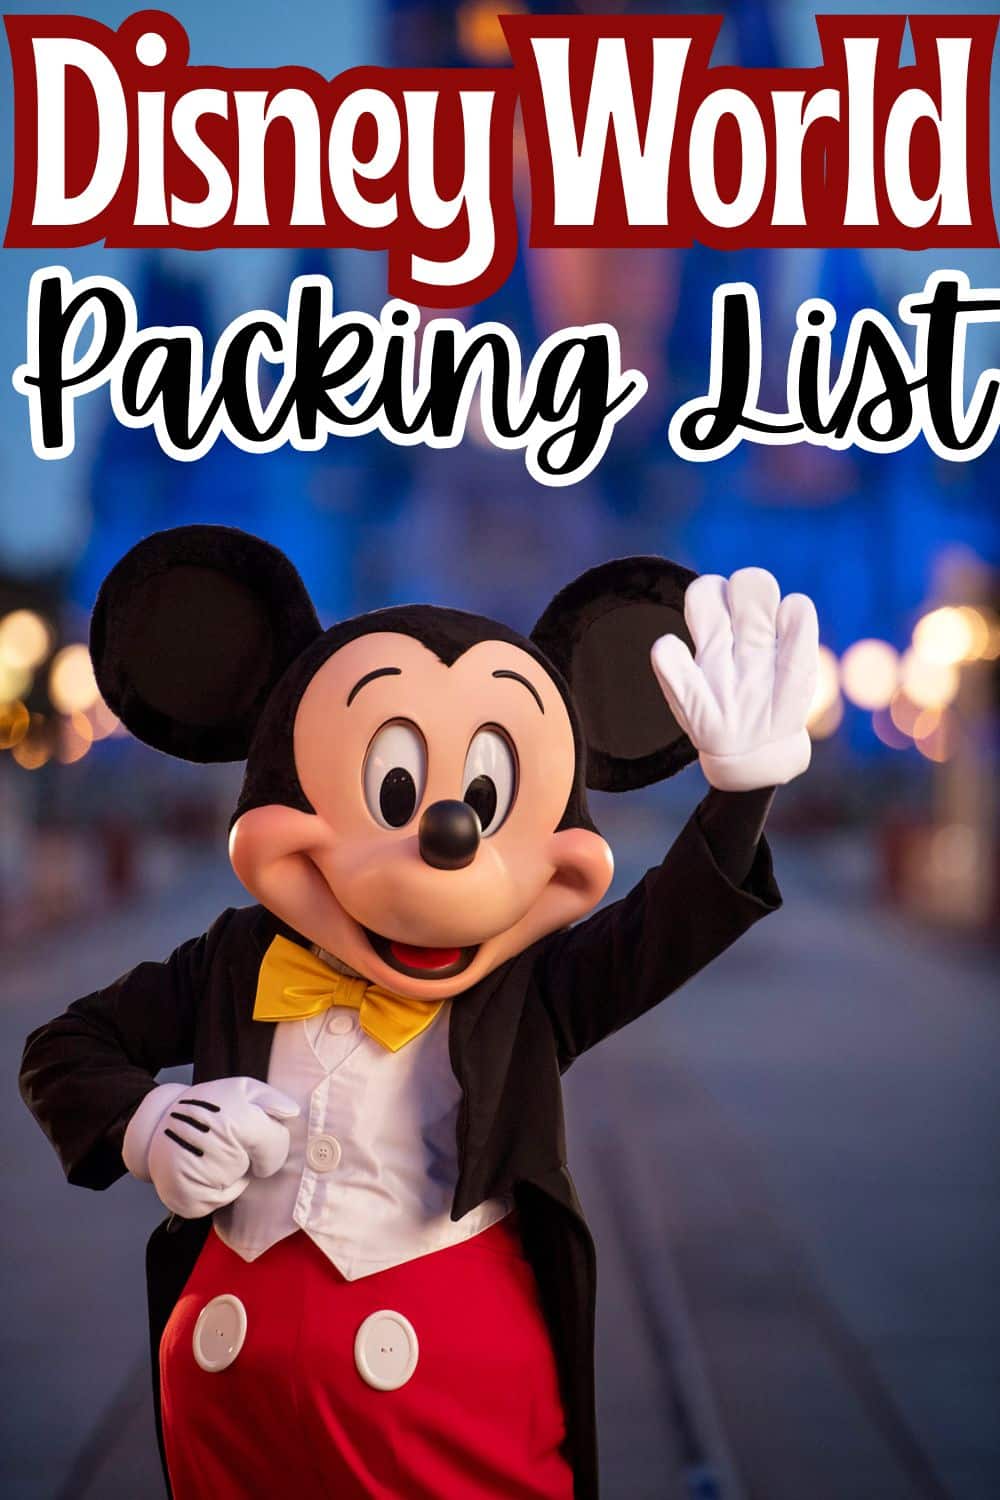 Disney Packing List